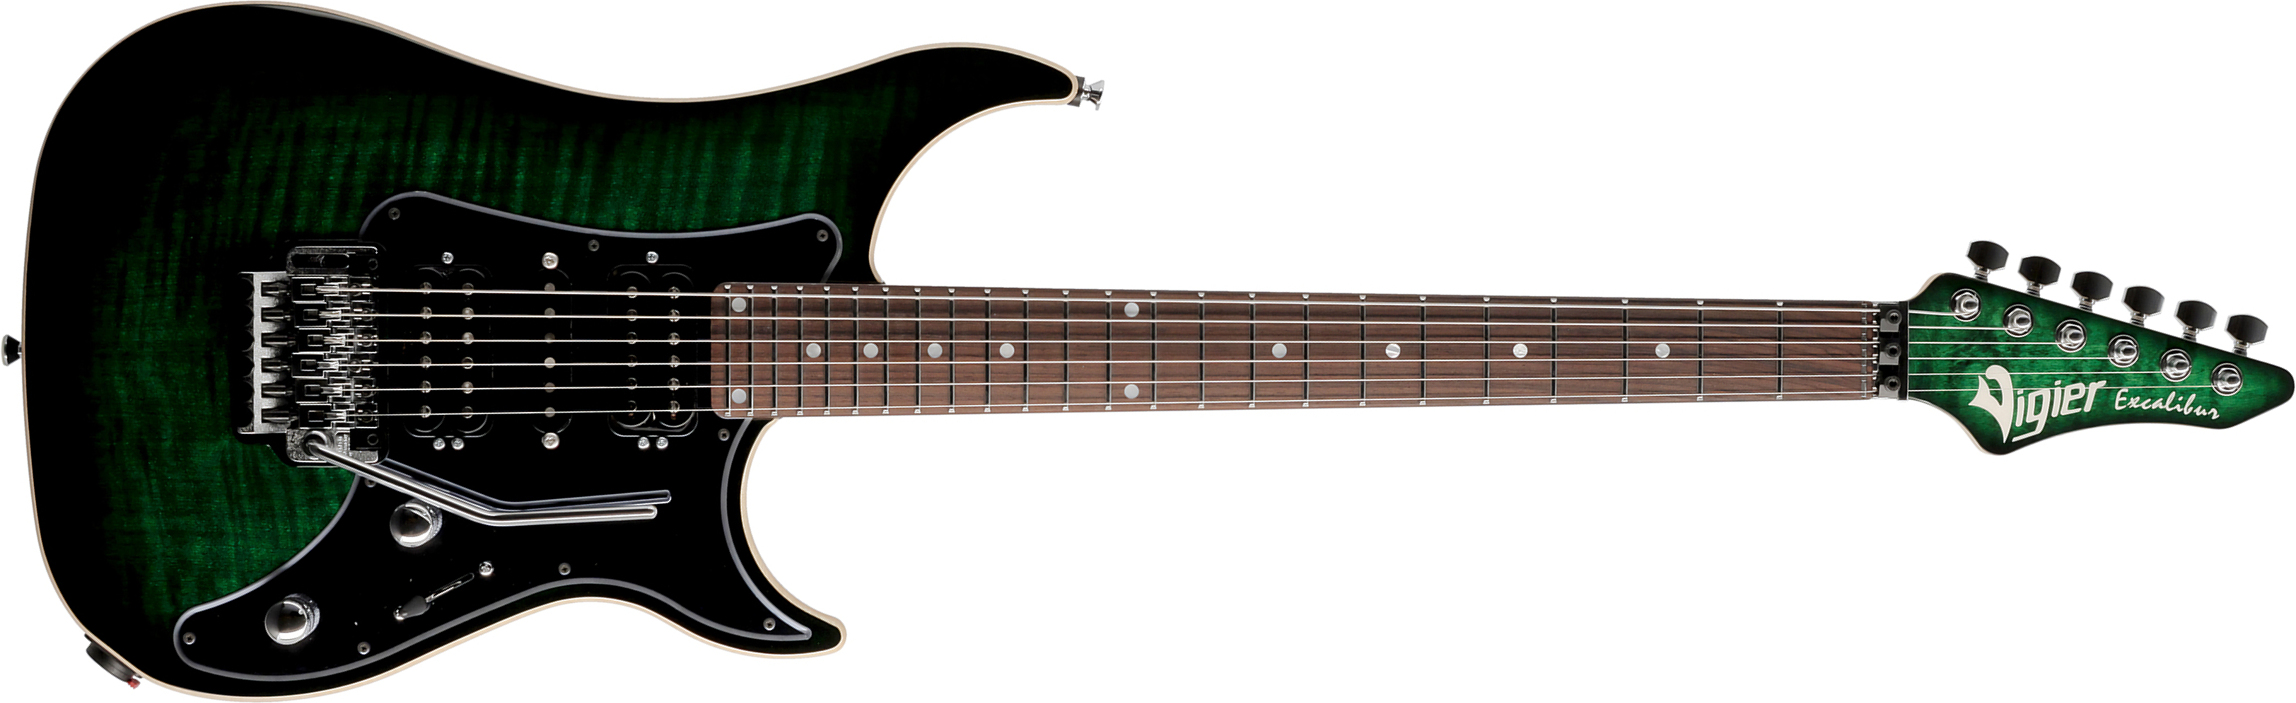 Vigier Excalibur Custom Hsh Fr Rw - Mysterious Green - Guitarra eléctrica con forma de str. - Main picture